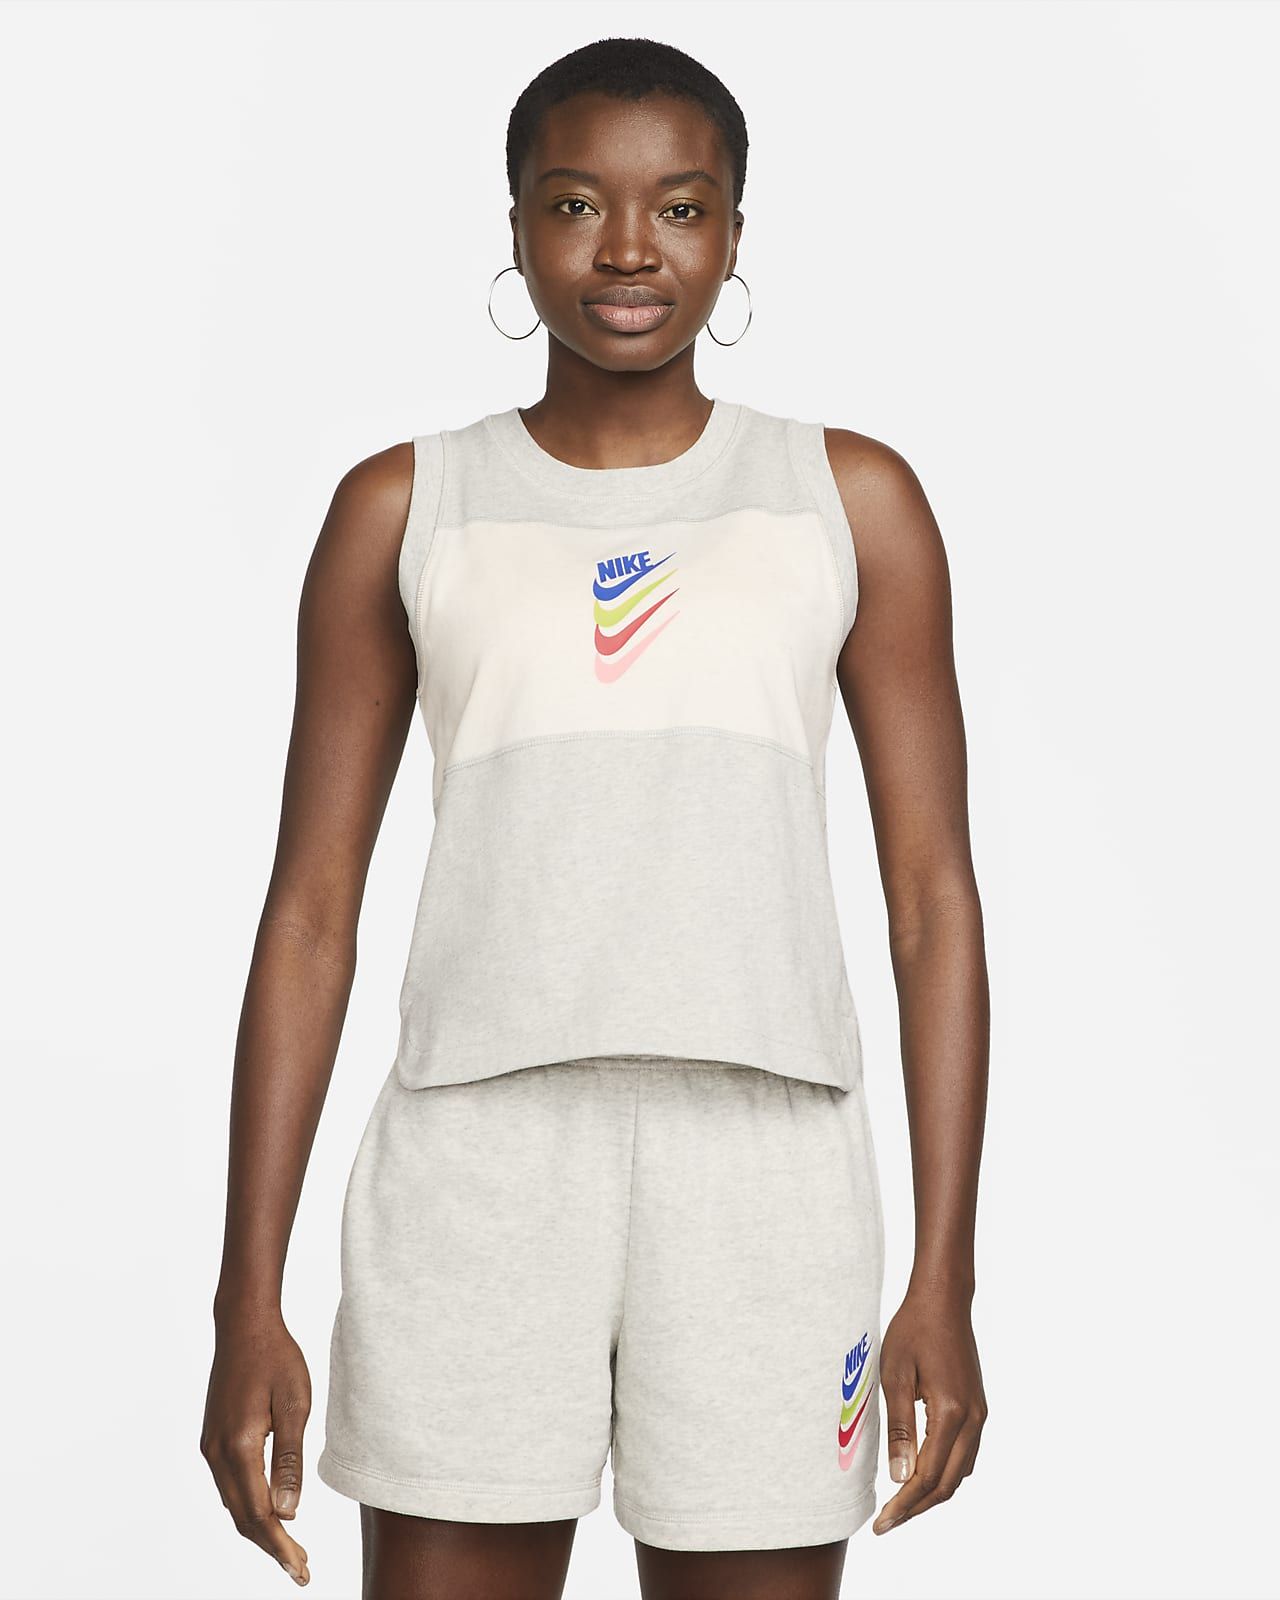 Nike Sportswear Women's Sleeveless Top. Nike.com | Nike (US)